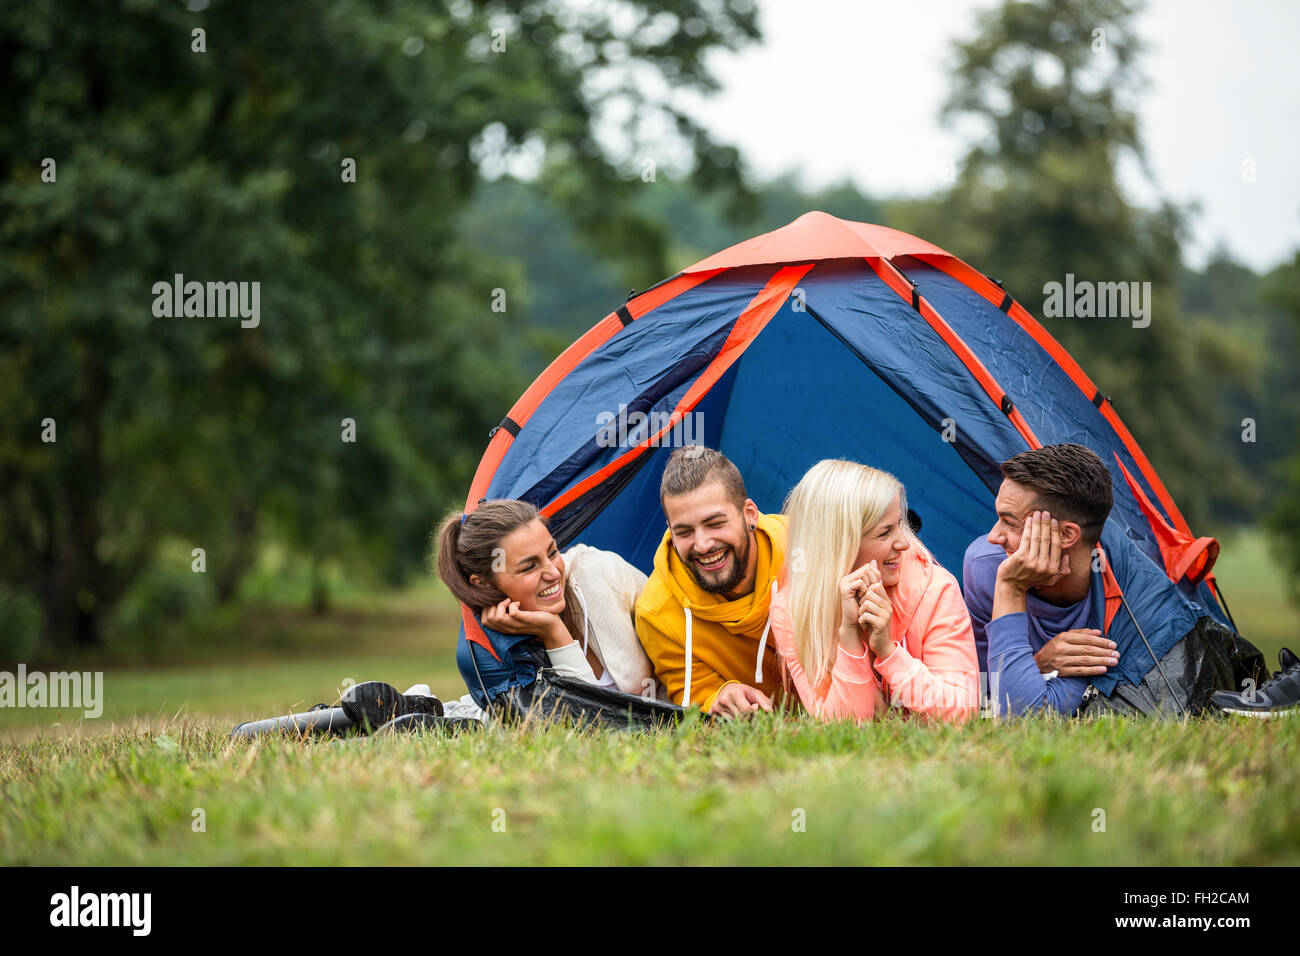 Threesome tent